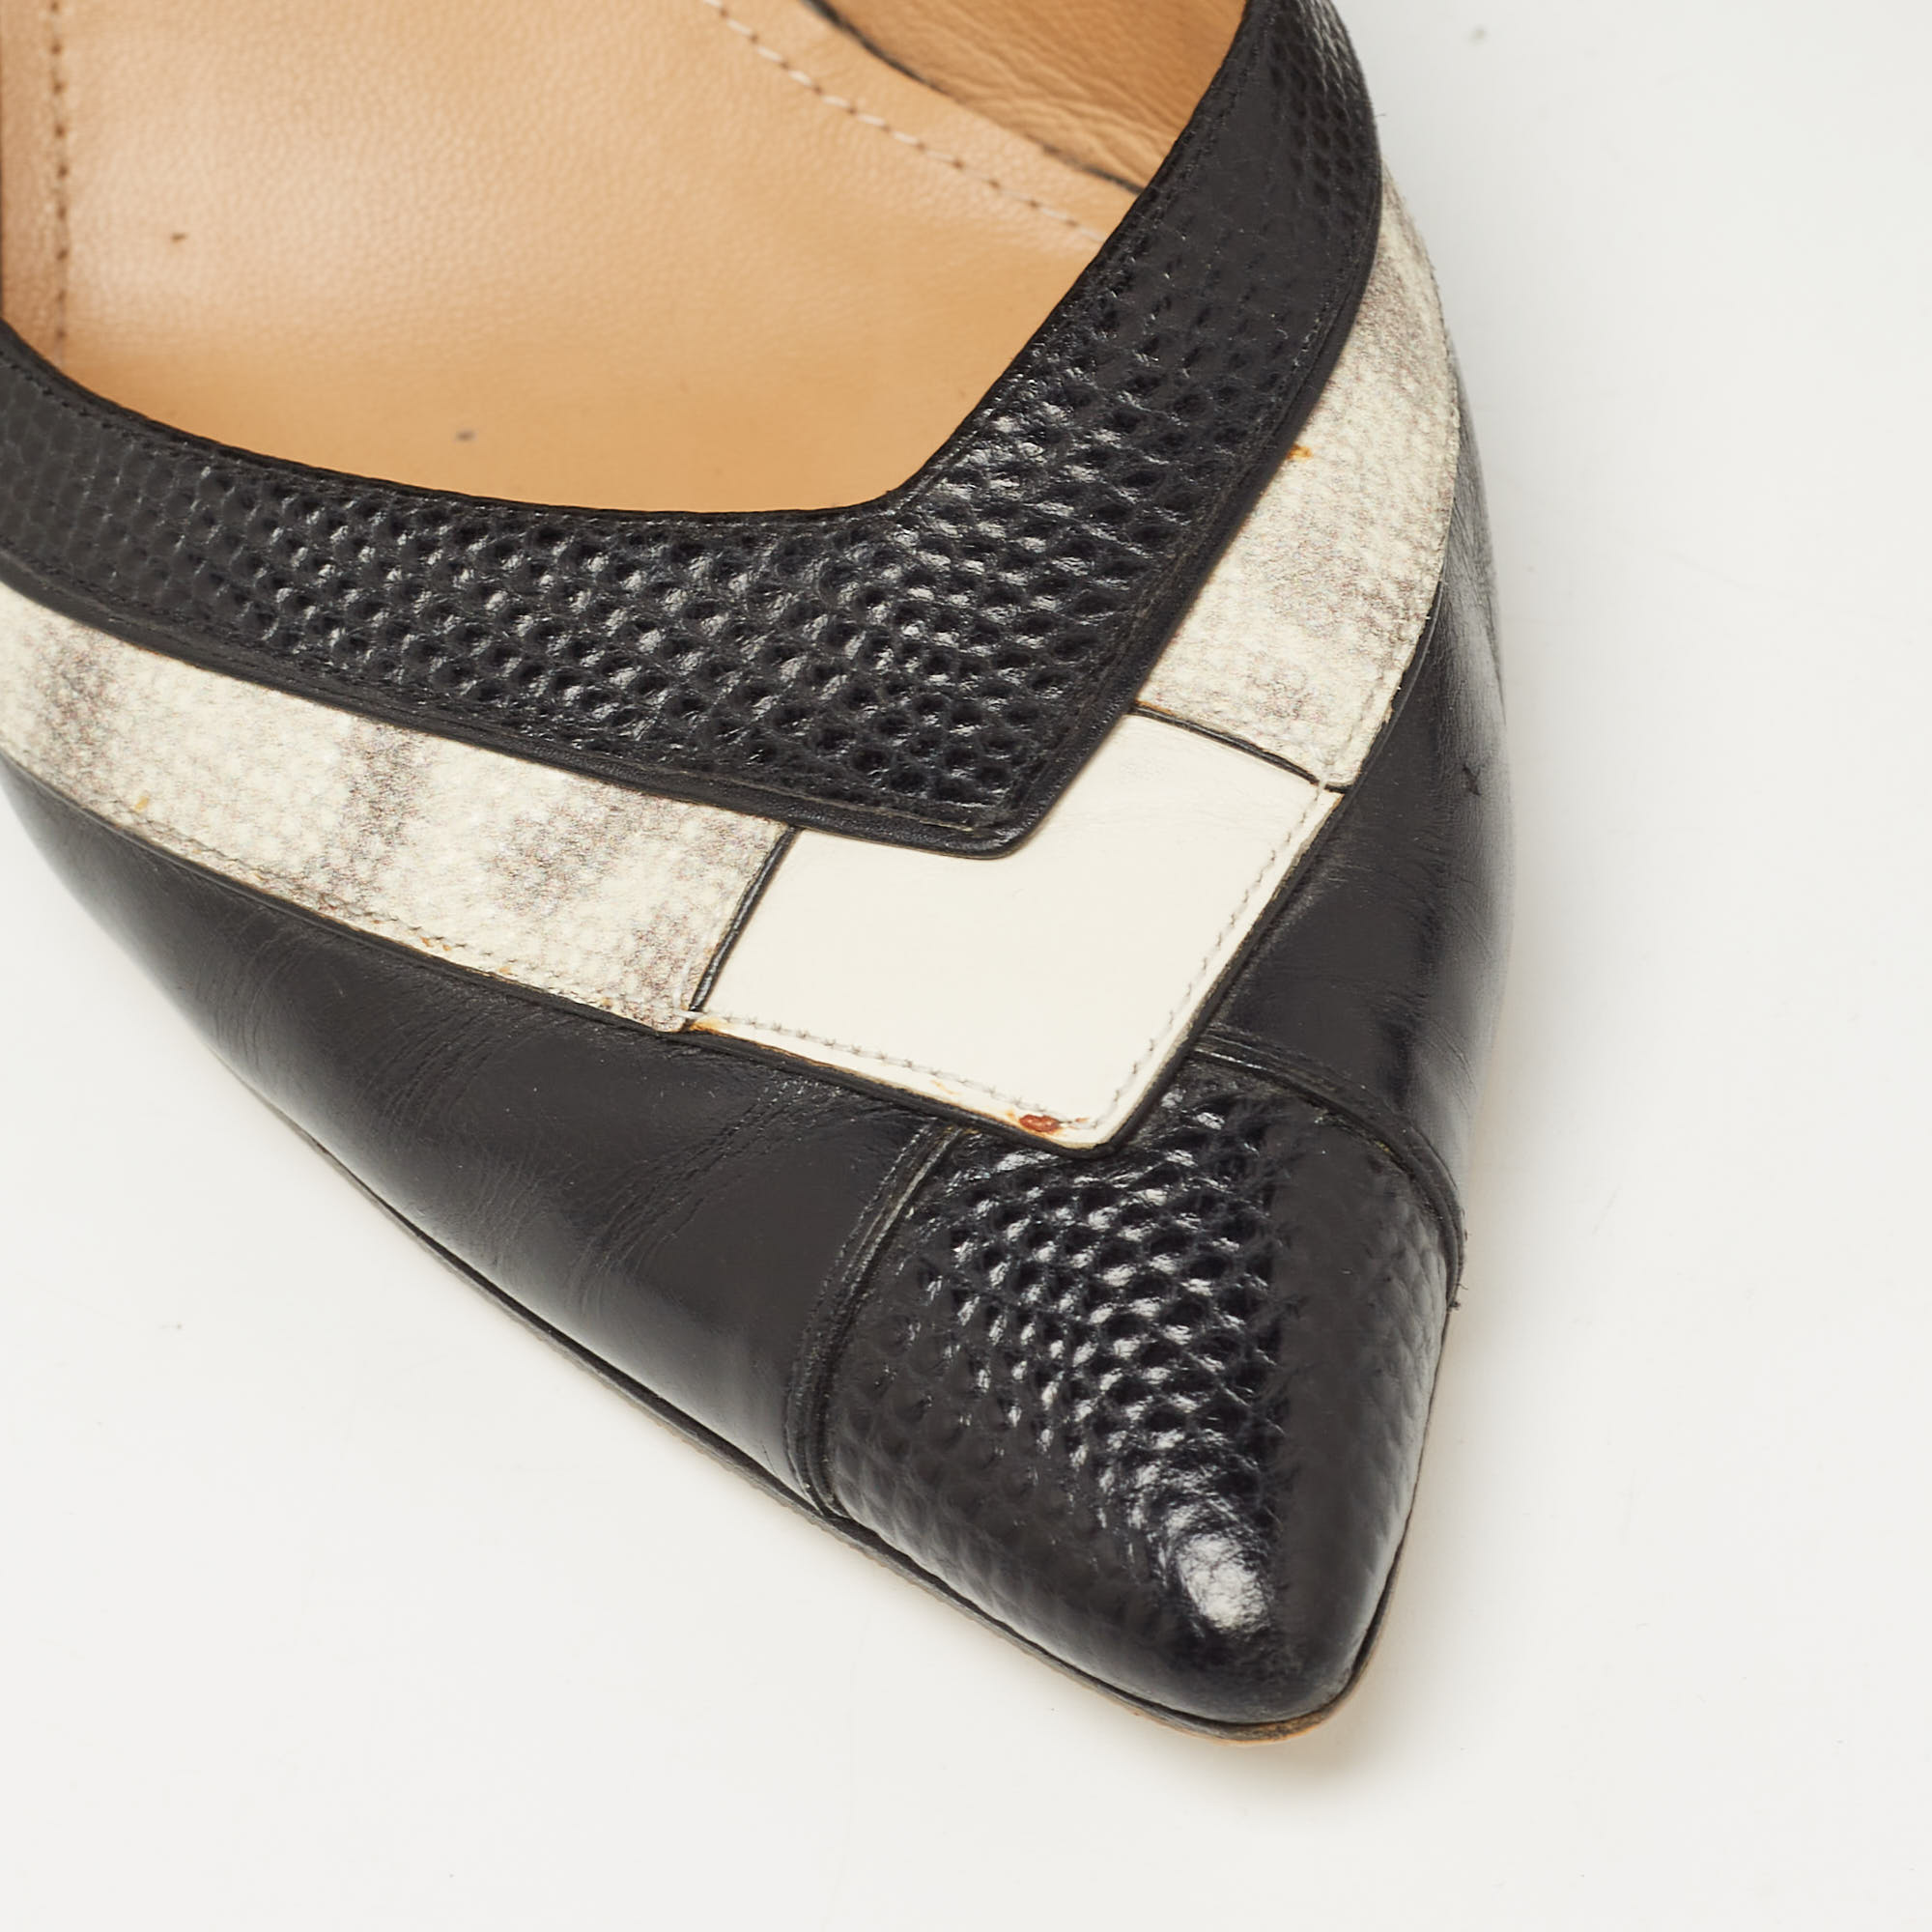 Salvatore Ferragamo Black/White Textured Leather Pointed Toe Pumps Size 38.5